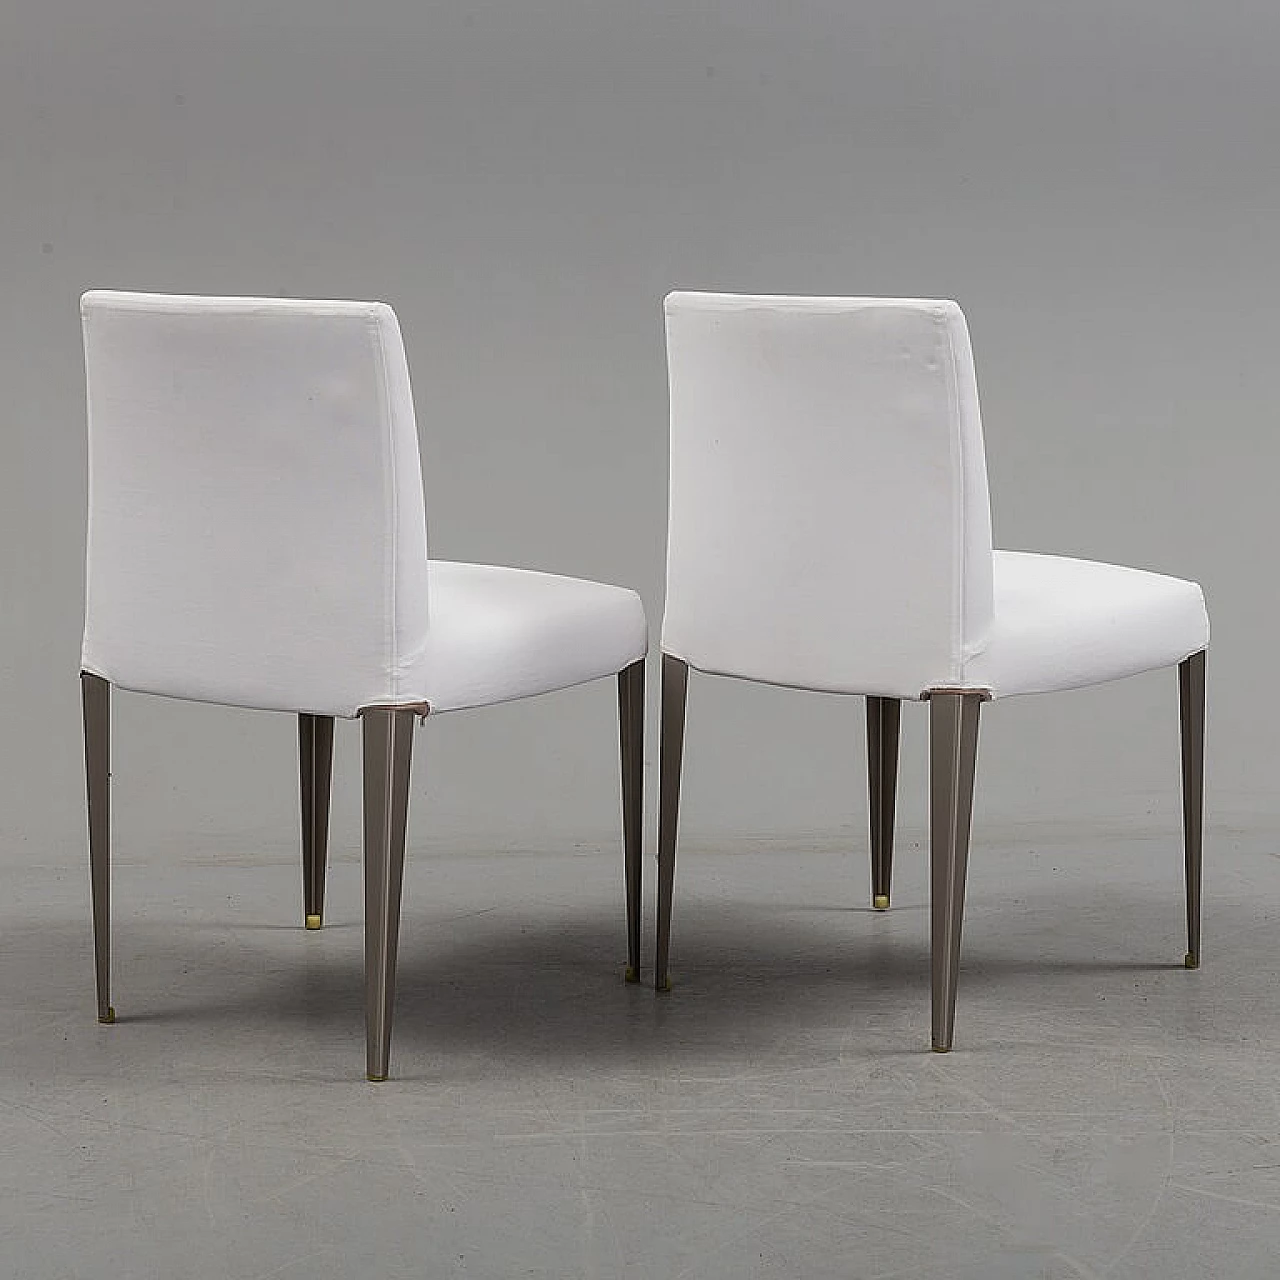 4 Melandra chairs by Antonio Citterio for B&B Italia 2